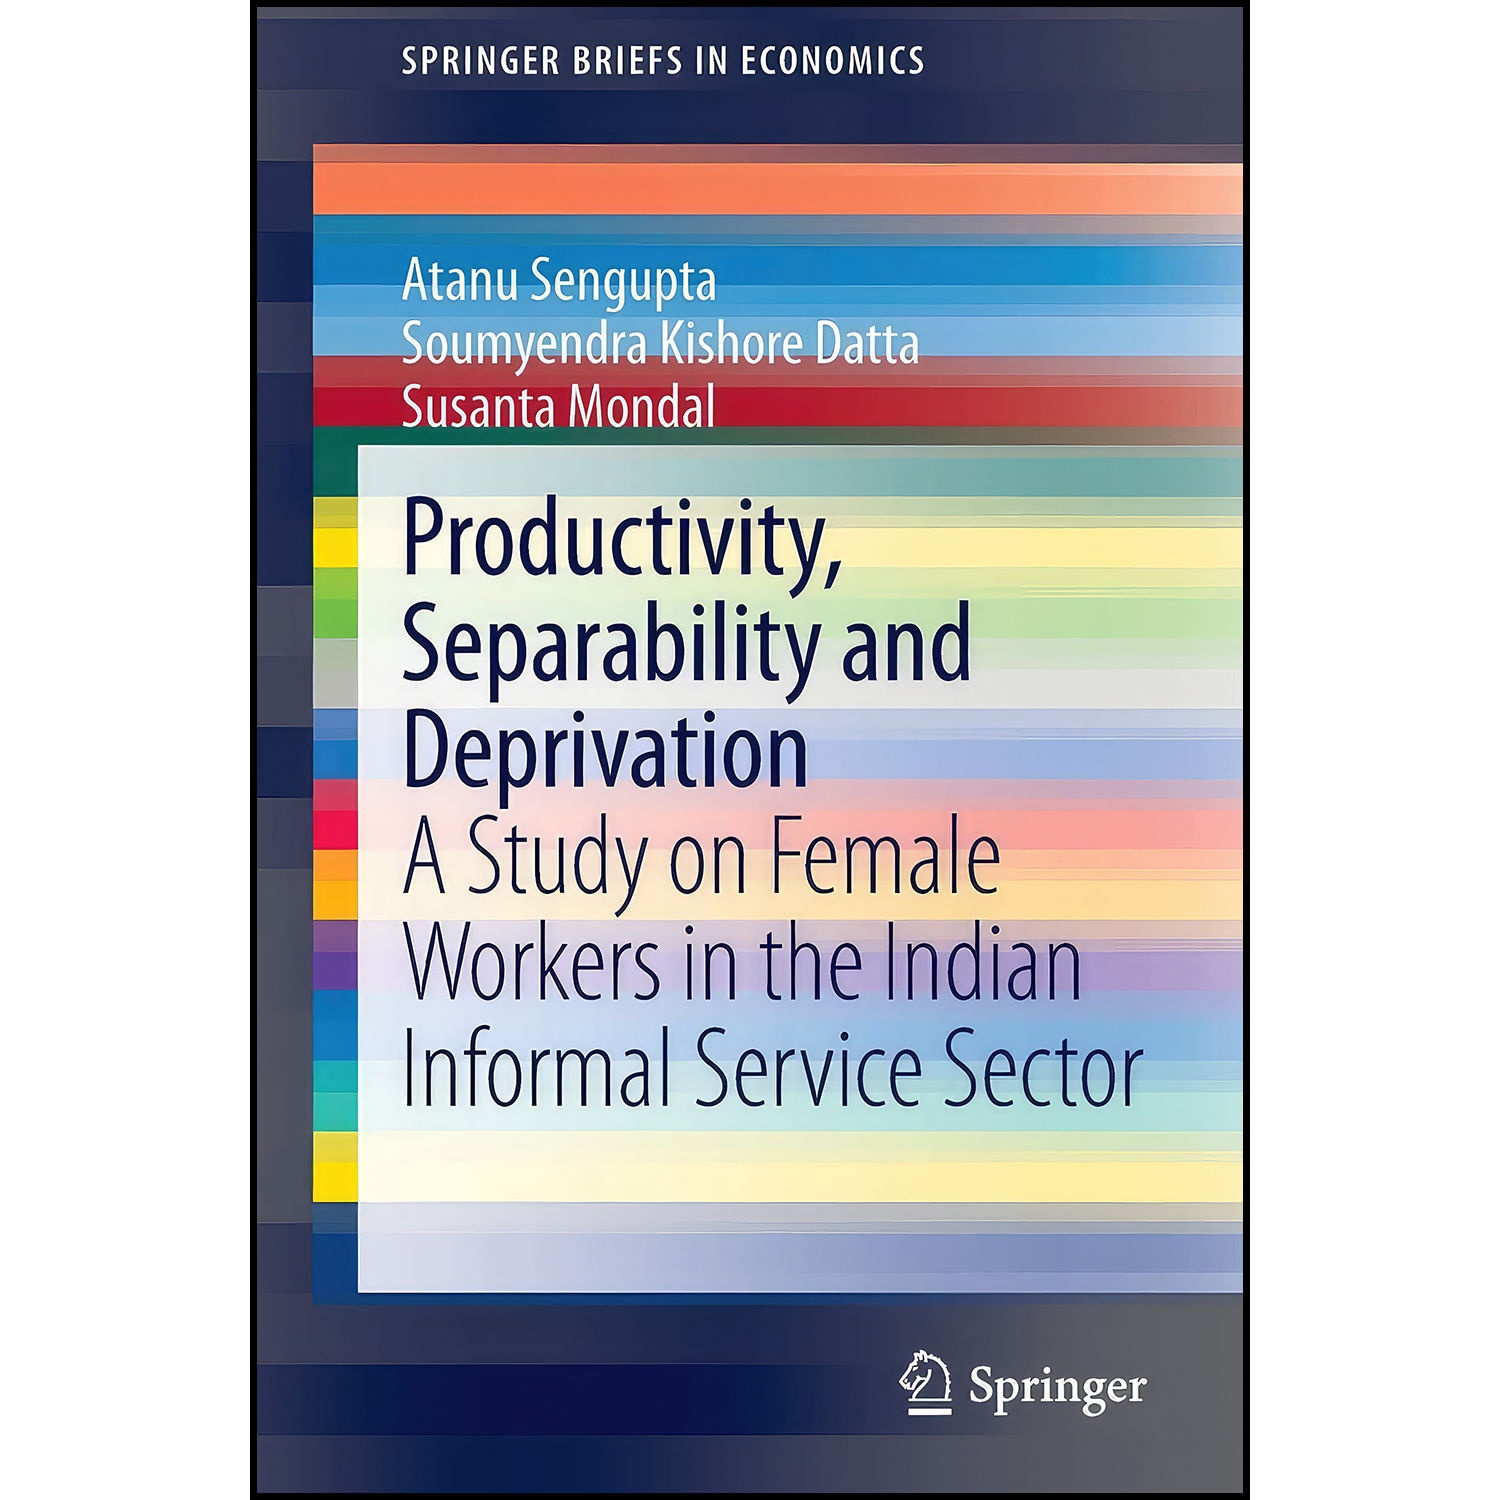 کتاب Productivity, Separability and Deprivation اثر جمعي از نويسندگان انتشارات بله